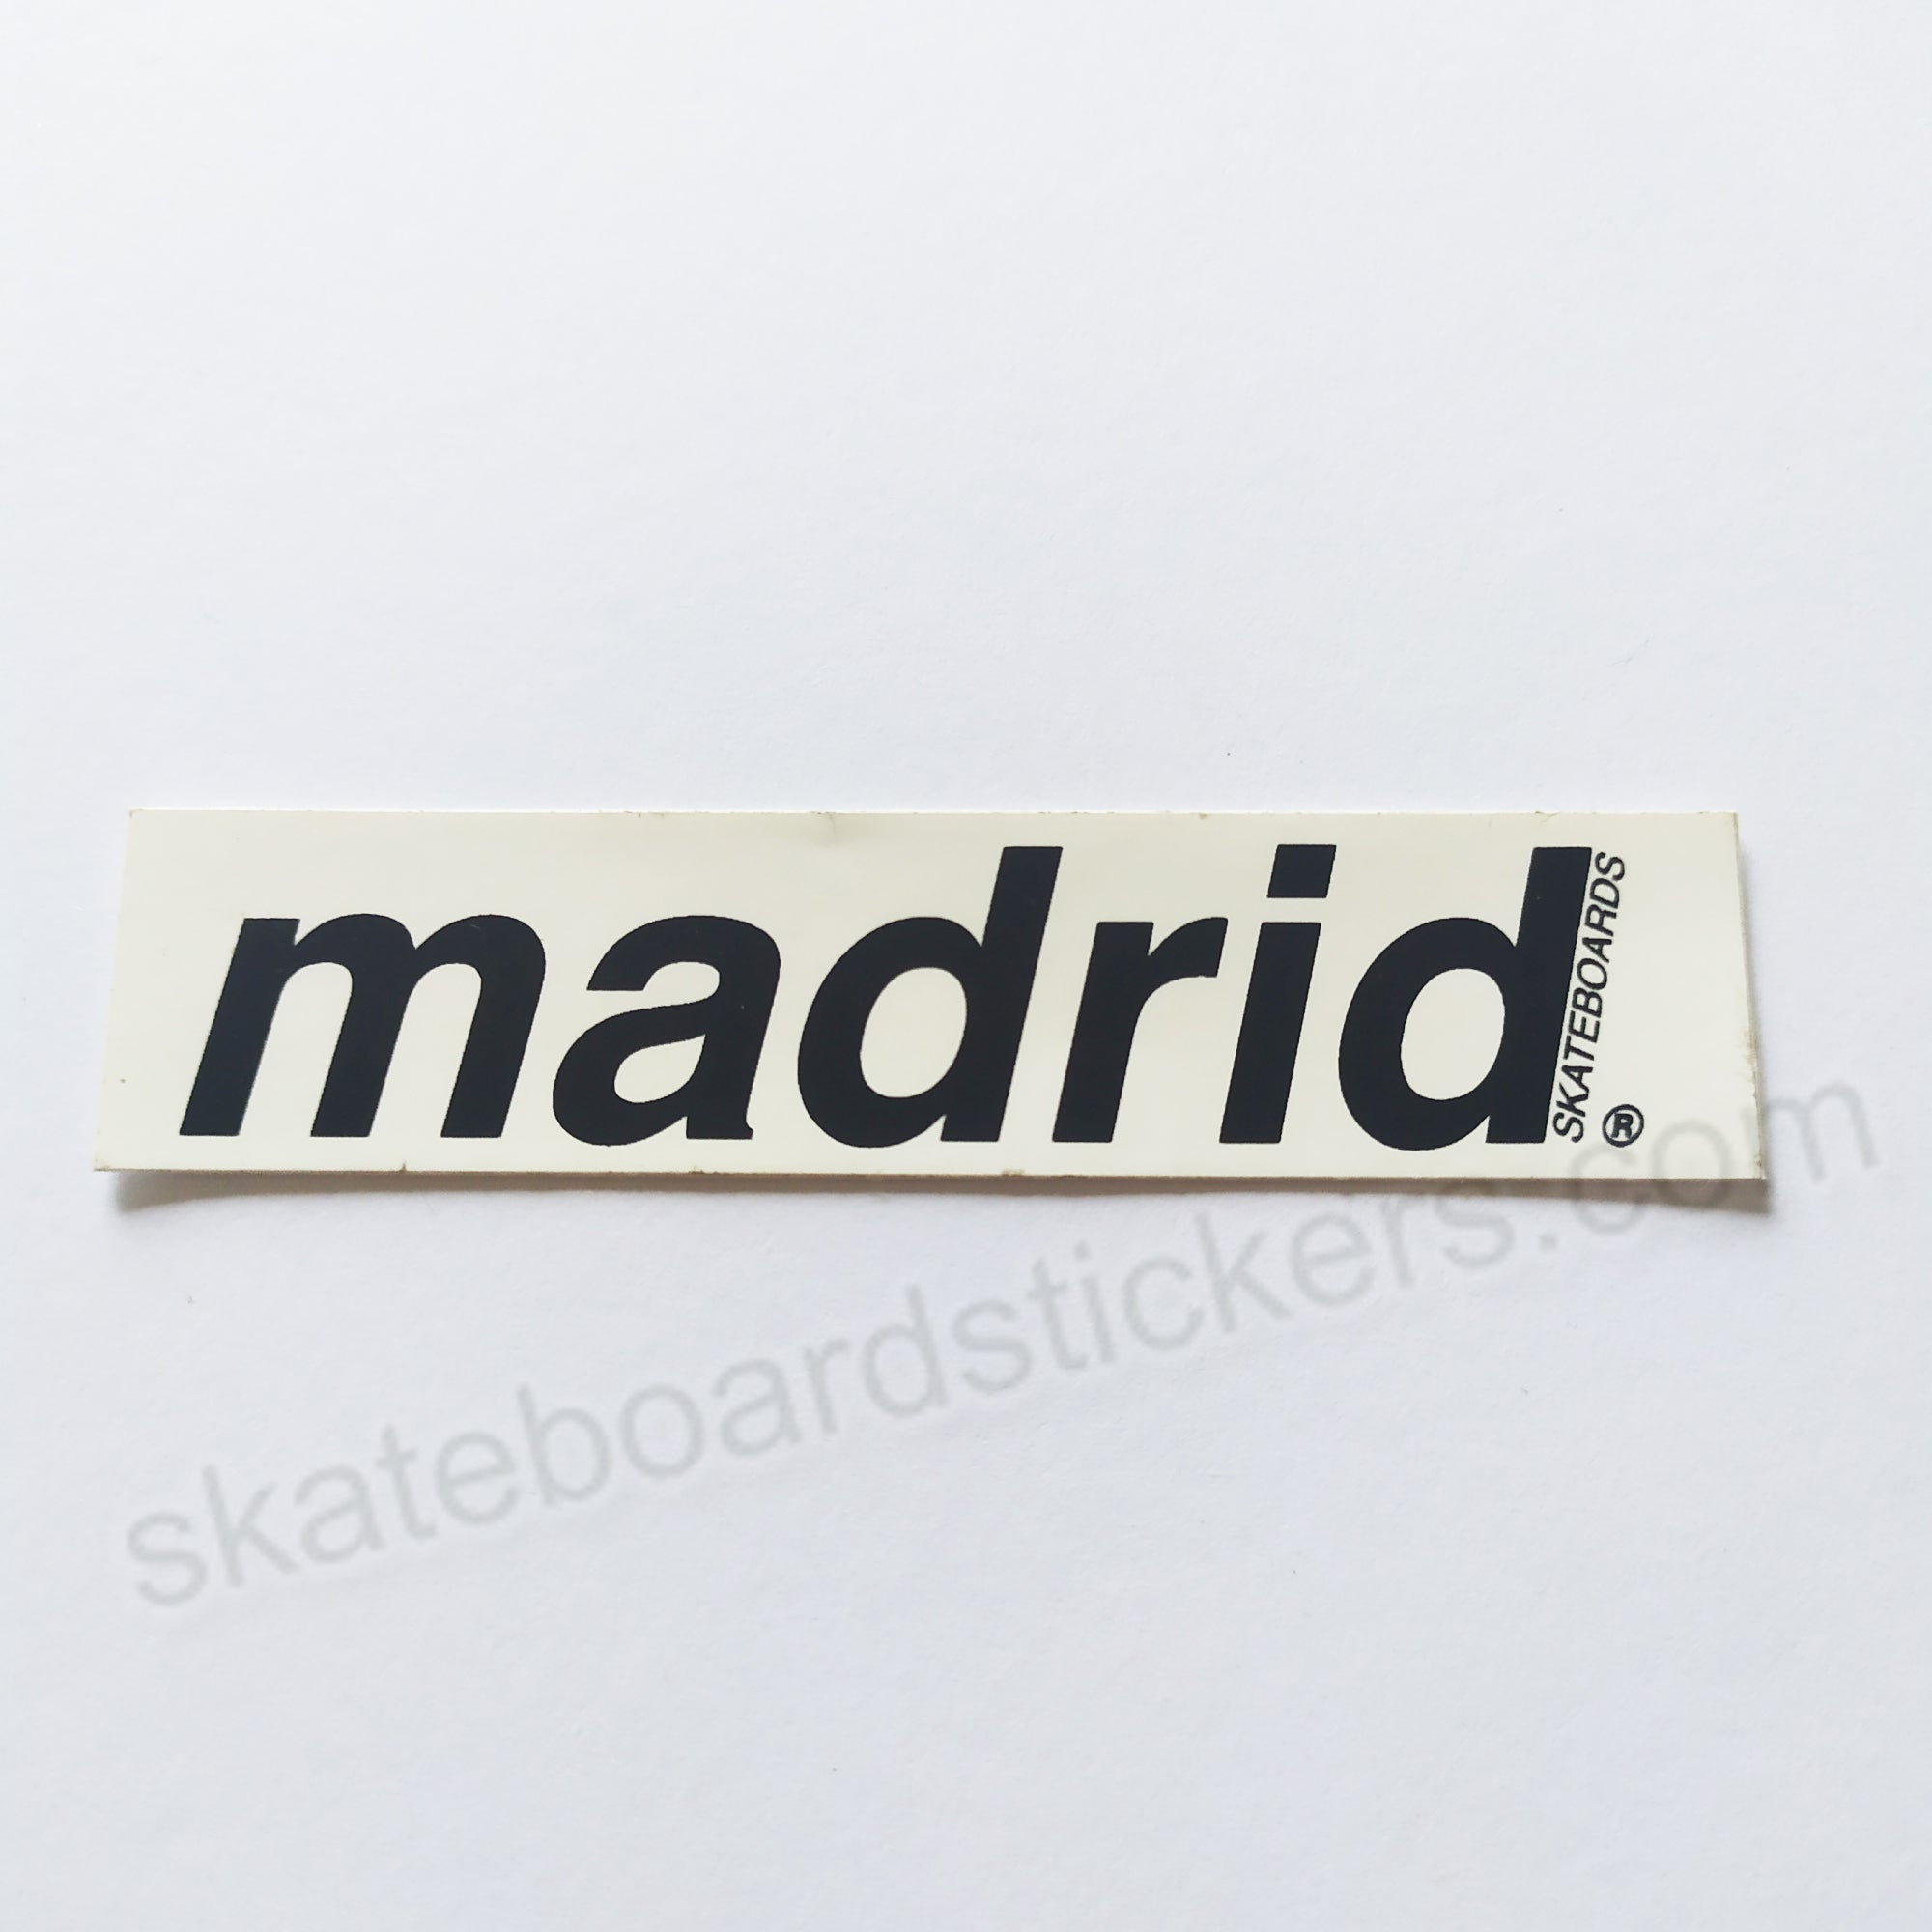 Madrid Skateboards Old School Skateboard Sticker - SkateboardStickers.com